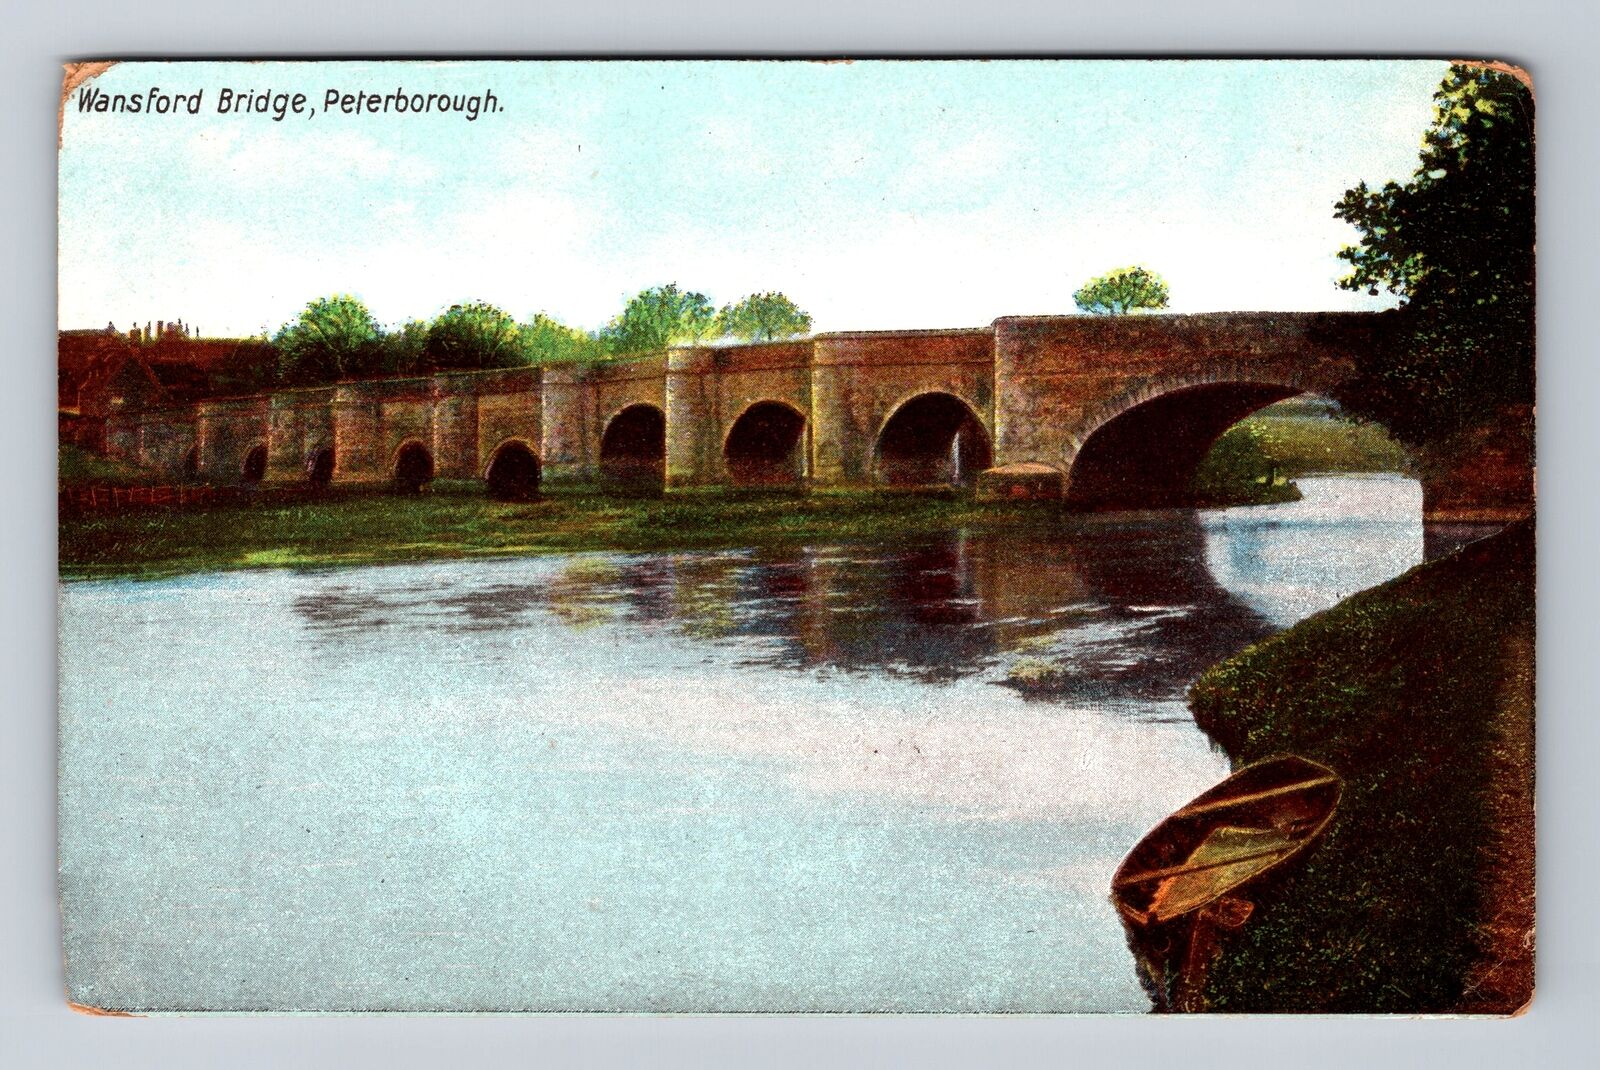 Peterborough England, Historic Wansford Bridge Over River Nene, Vintage Postcard